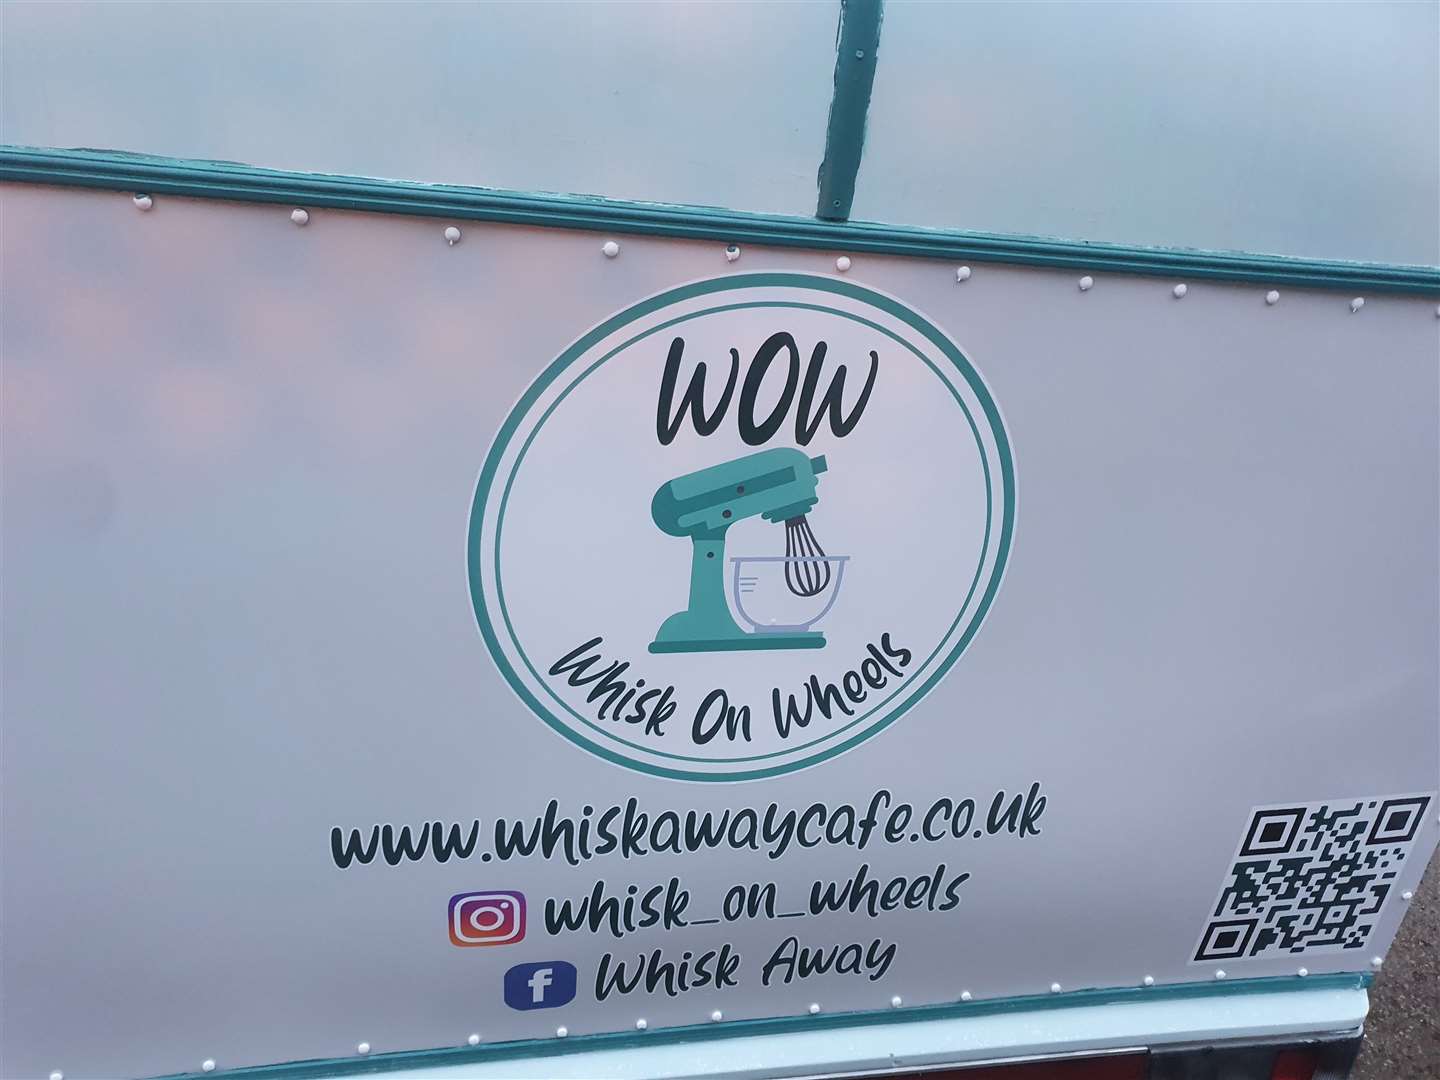 Whisk Away cafe new mobile venture, Whisk On Wheels.